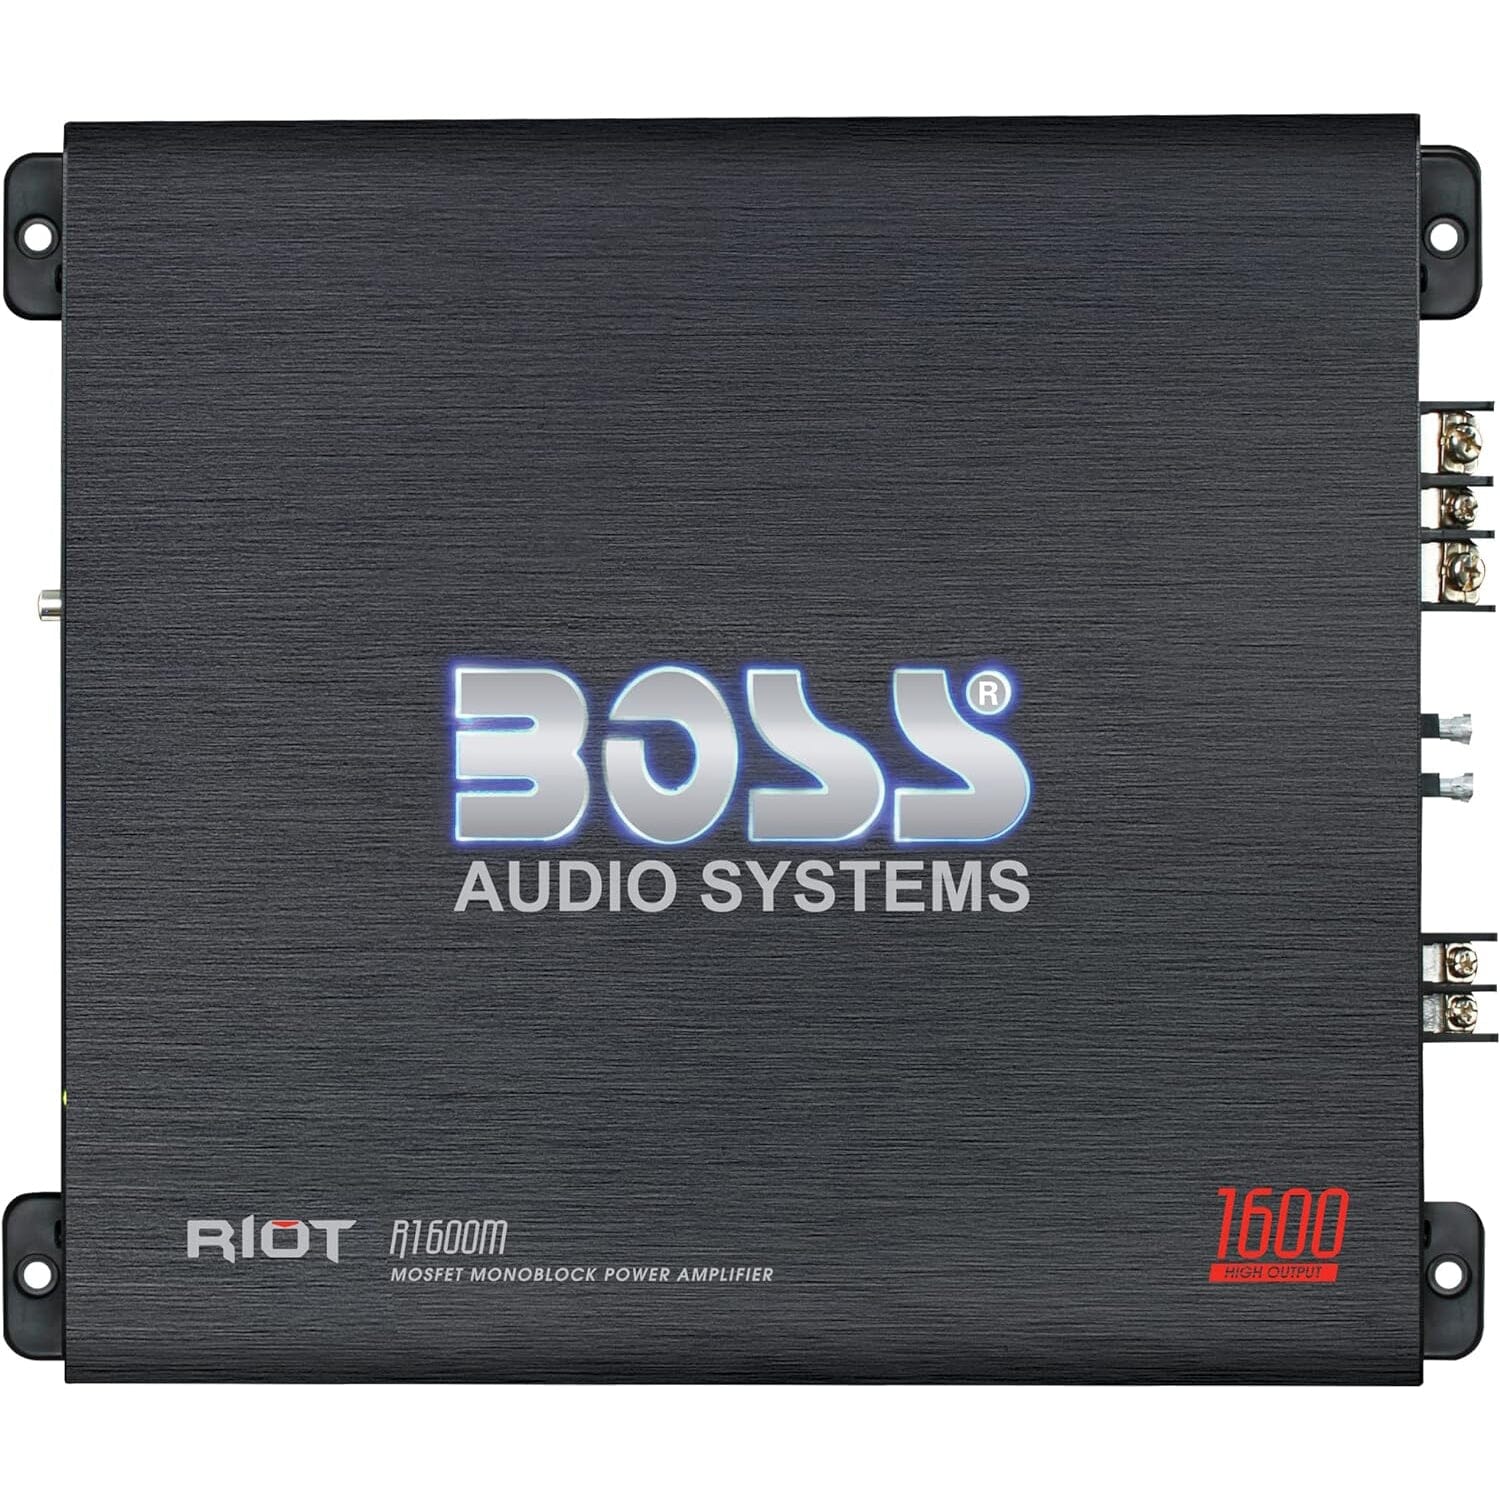 DailySale BOSS Audio Systems MODEL R1600M Car Amplifier (Refurbished)